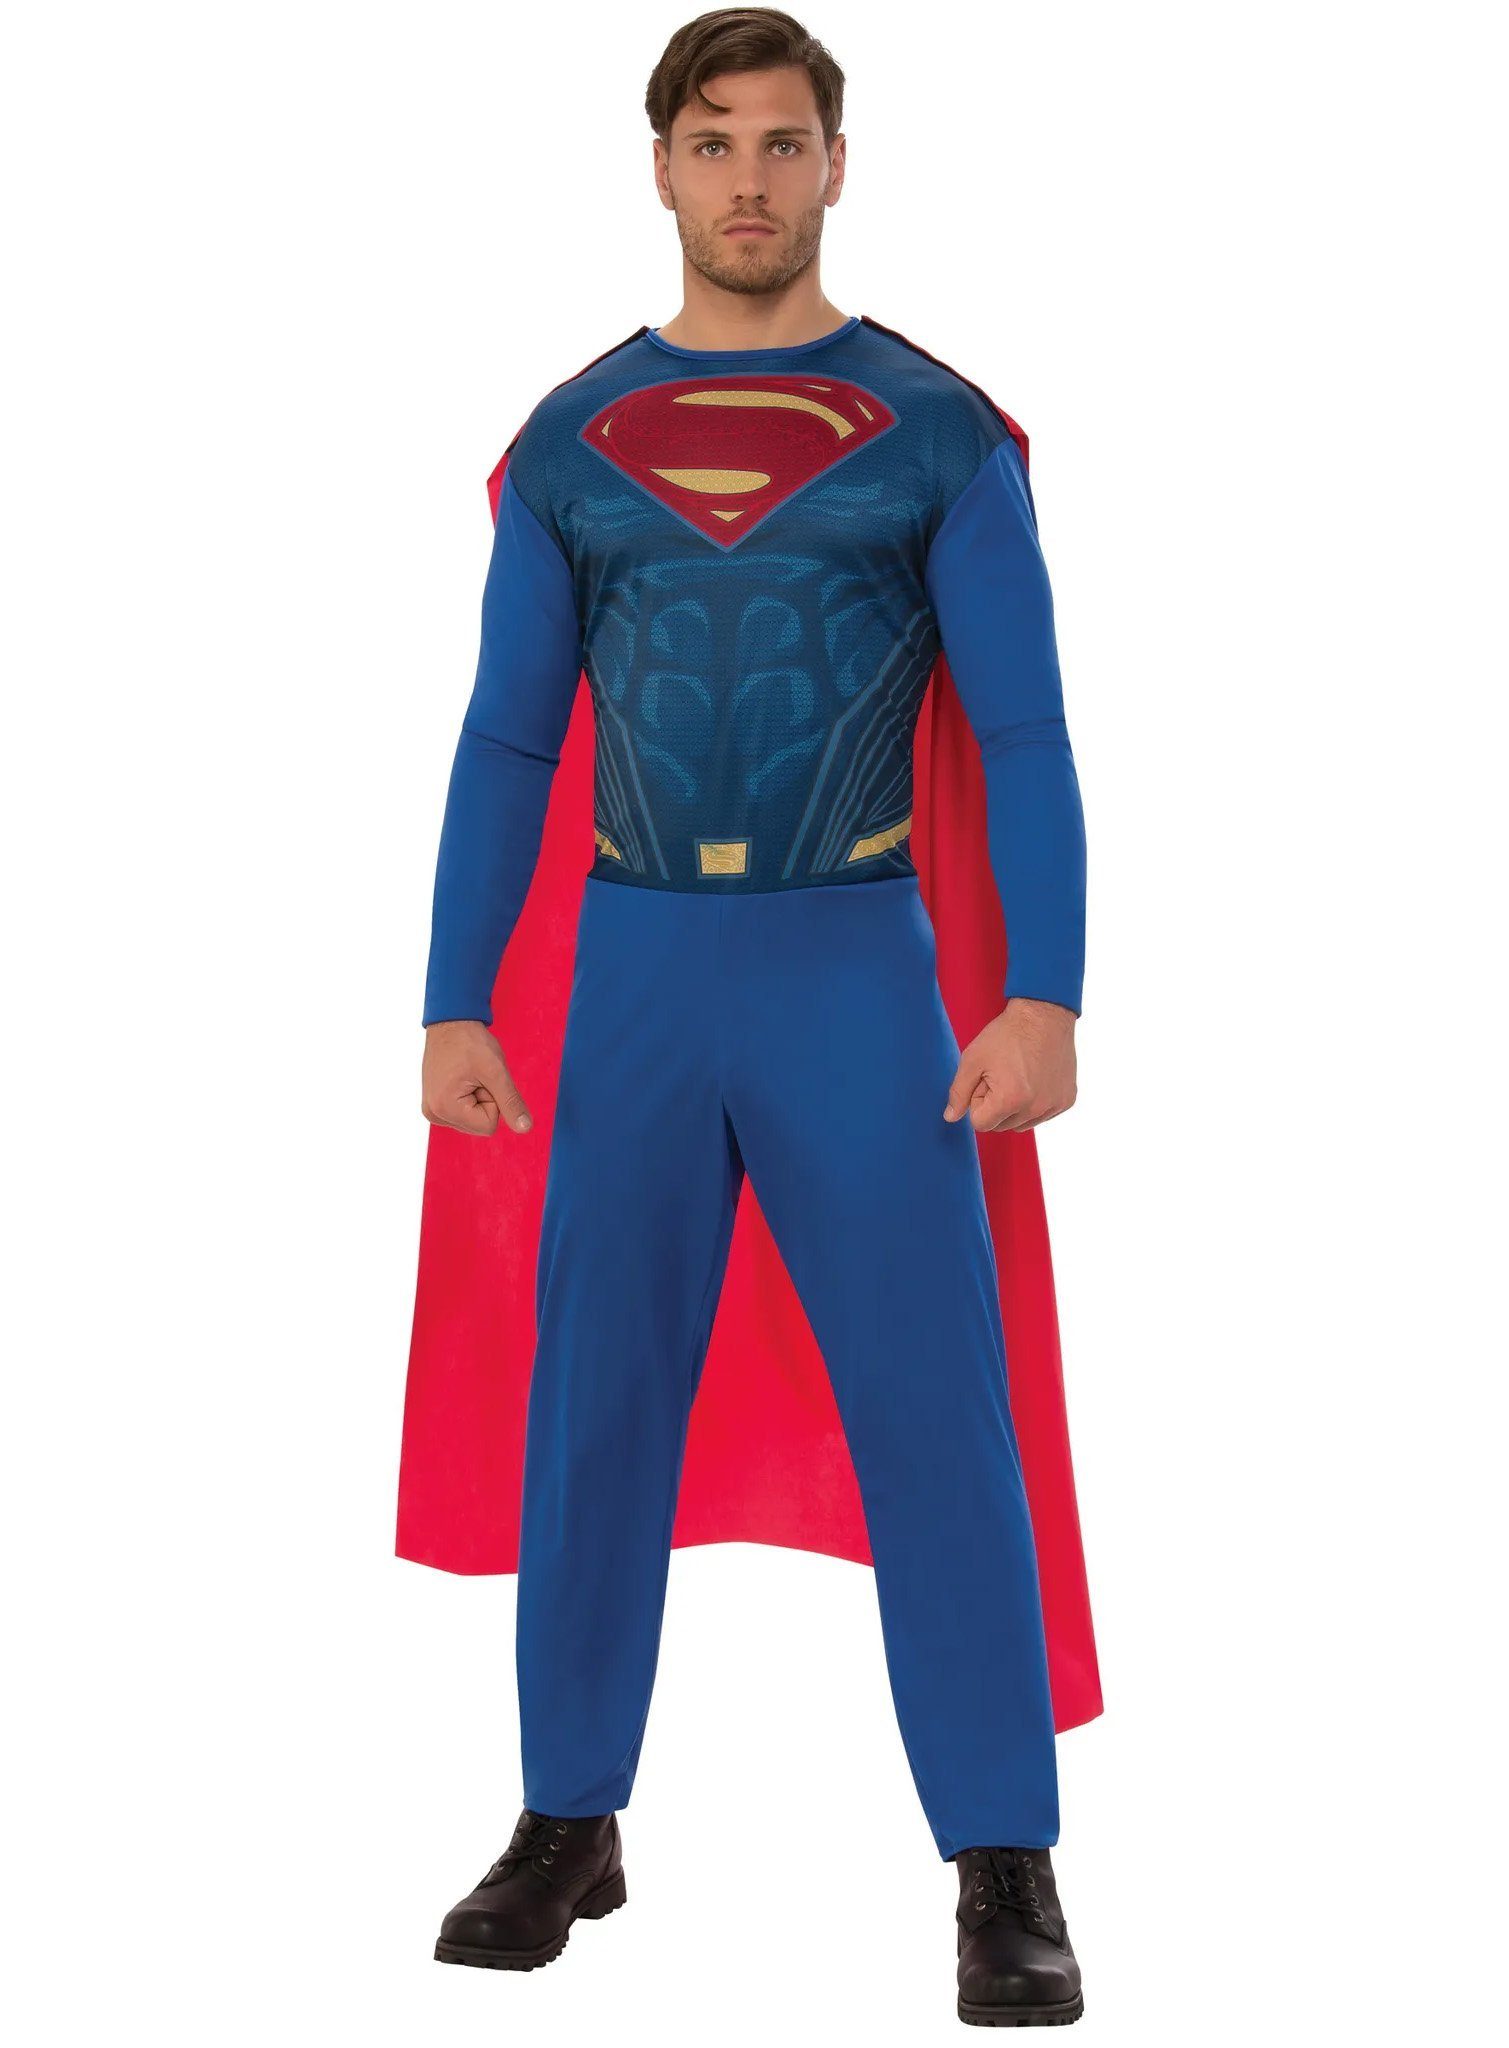 Rubie´s Kostüm Superman Comic Kostüm, Schnell & easy verkleidet als Comic-Superheld!